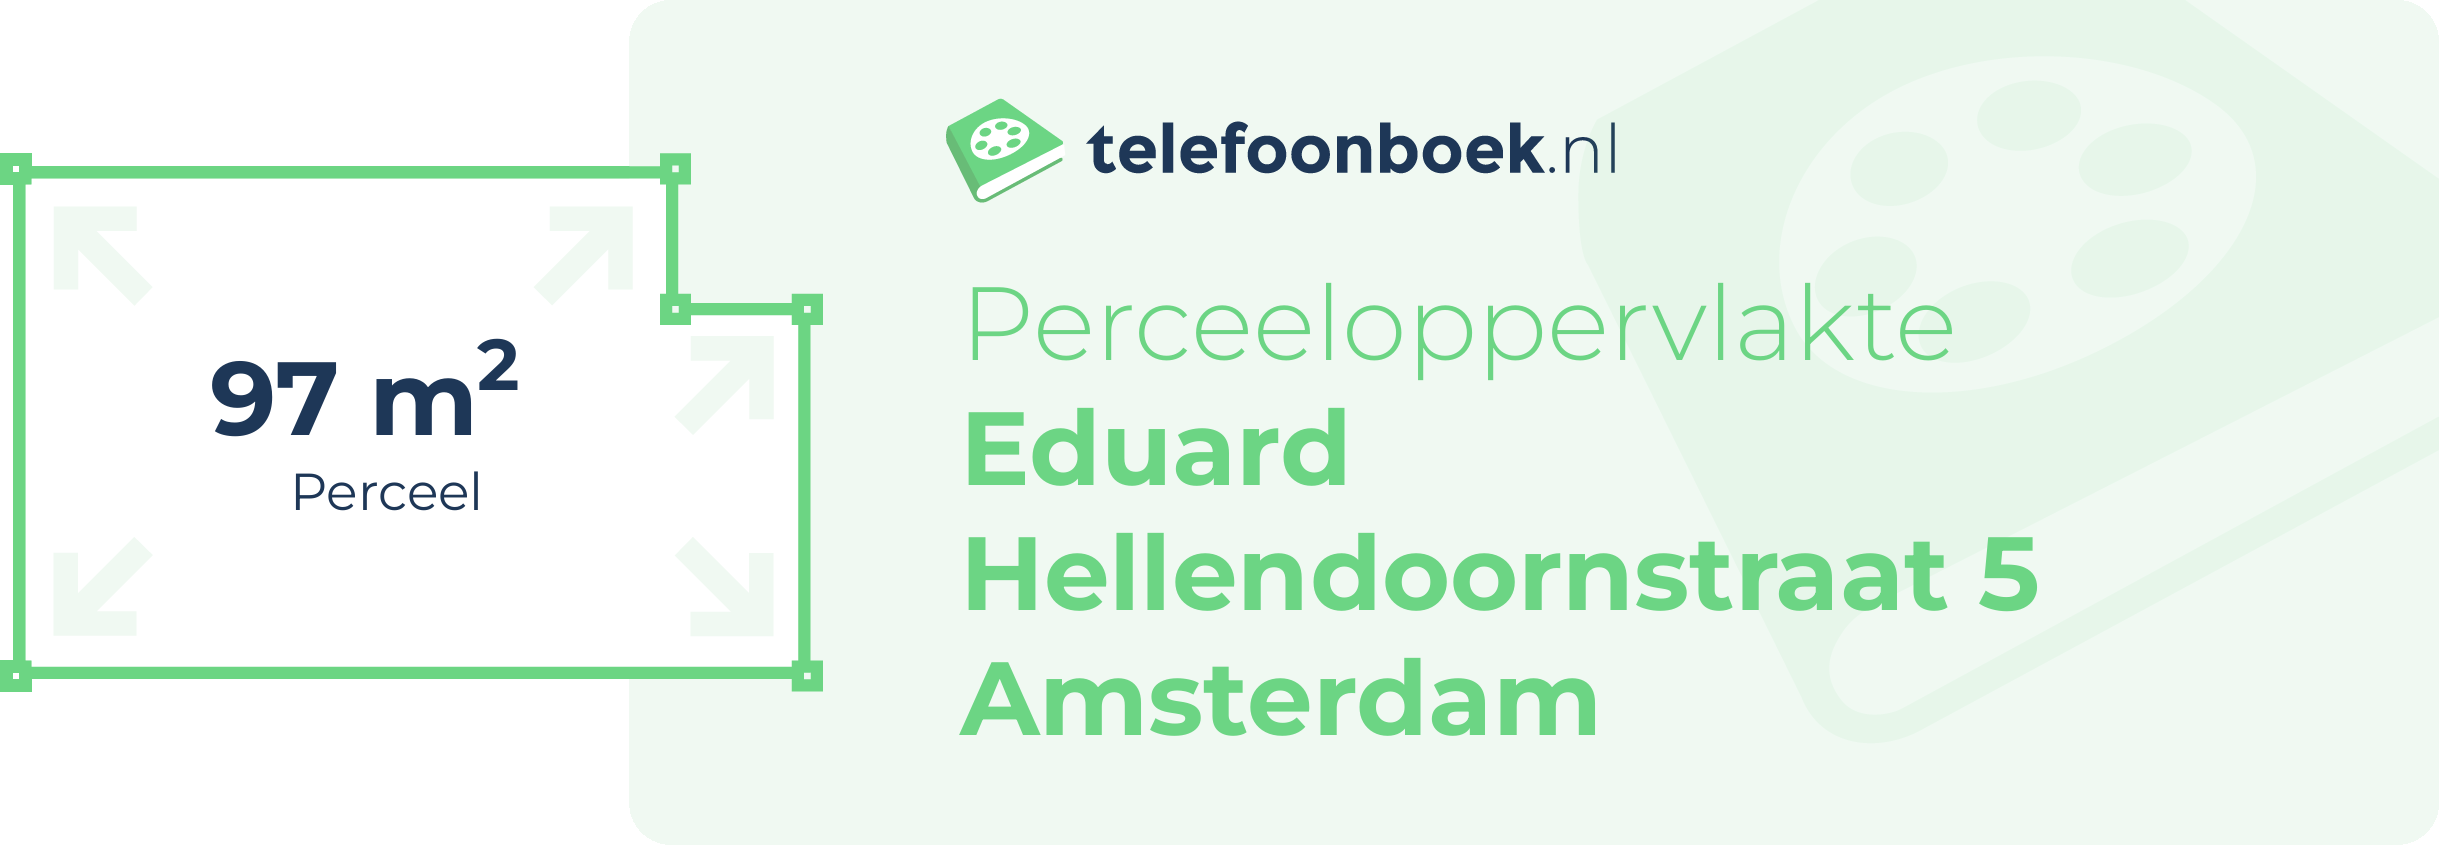 Perceeloppervlakte Eduard Hellendoornstraat 5 Amsterdam